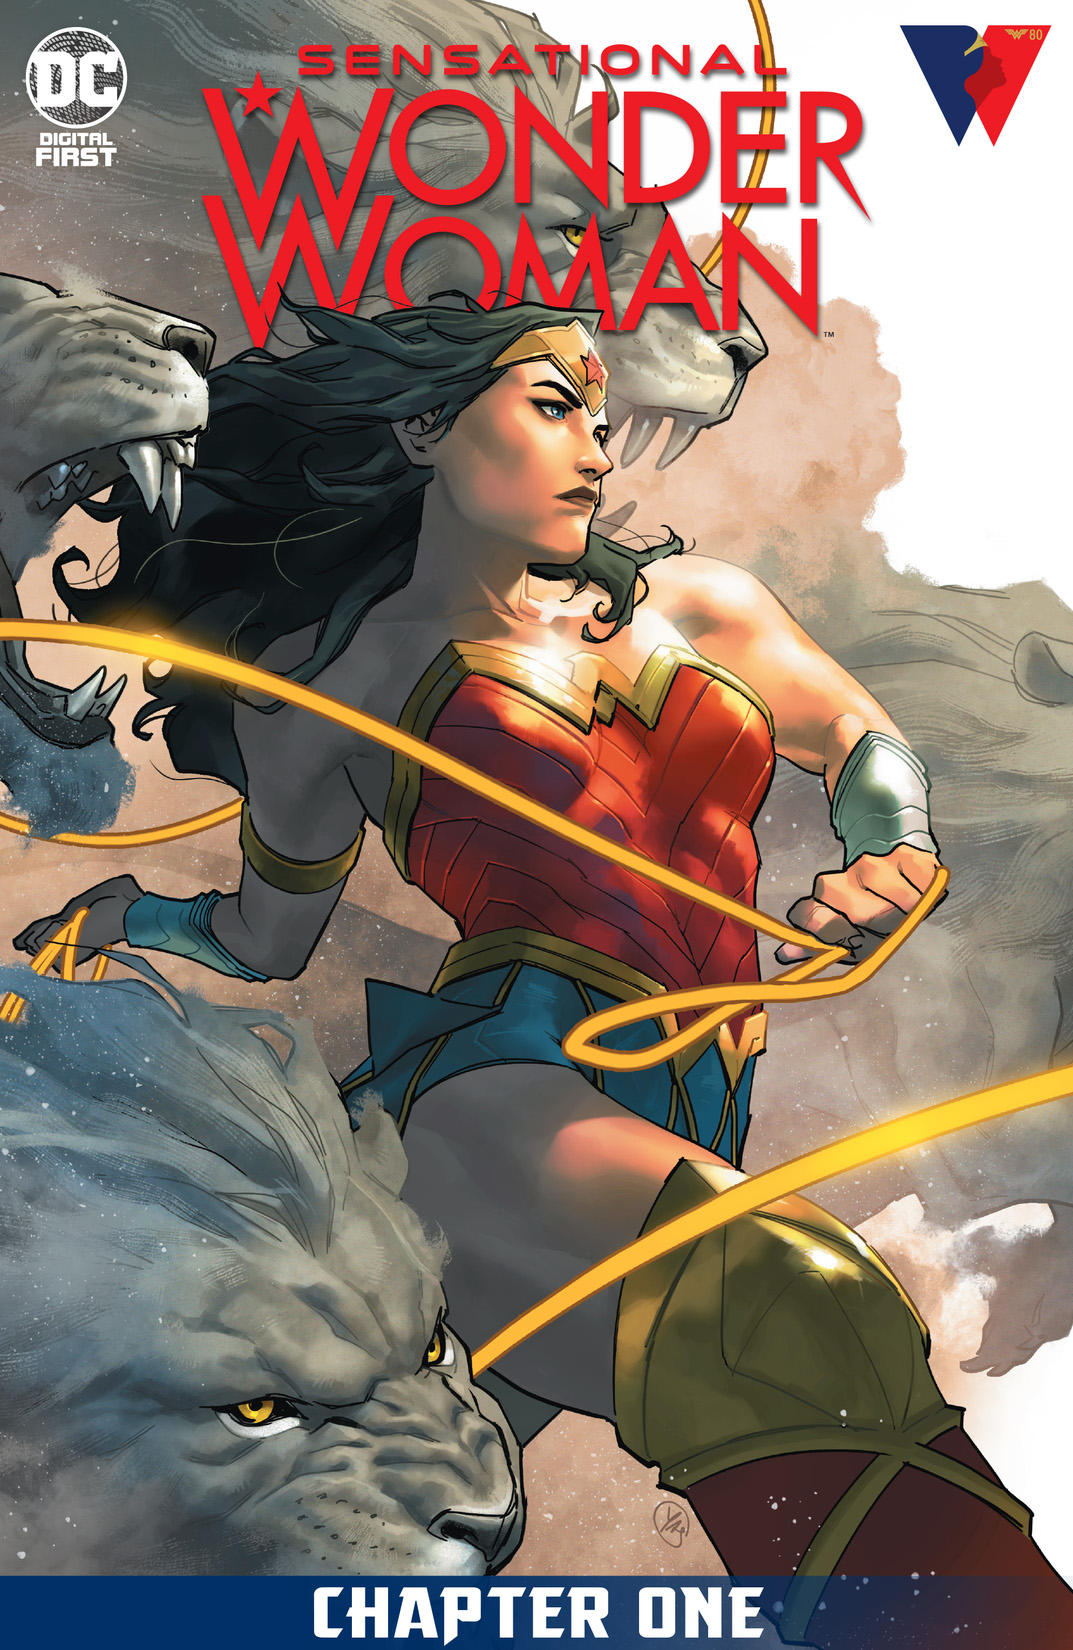 Sensational Wonder Woman #1 preview images